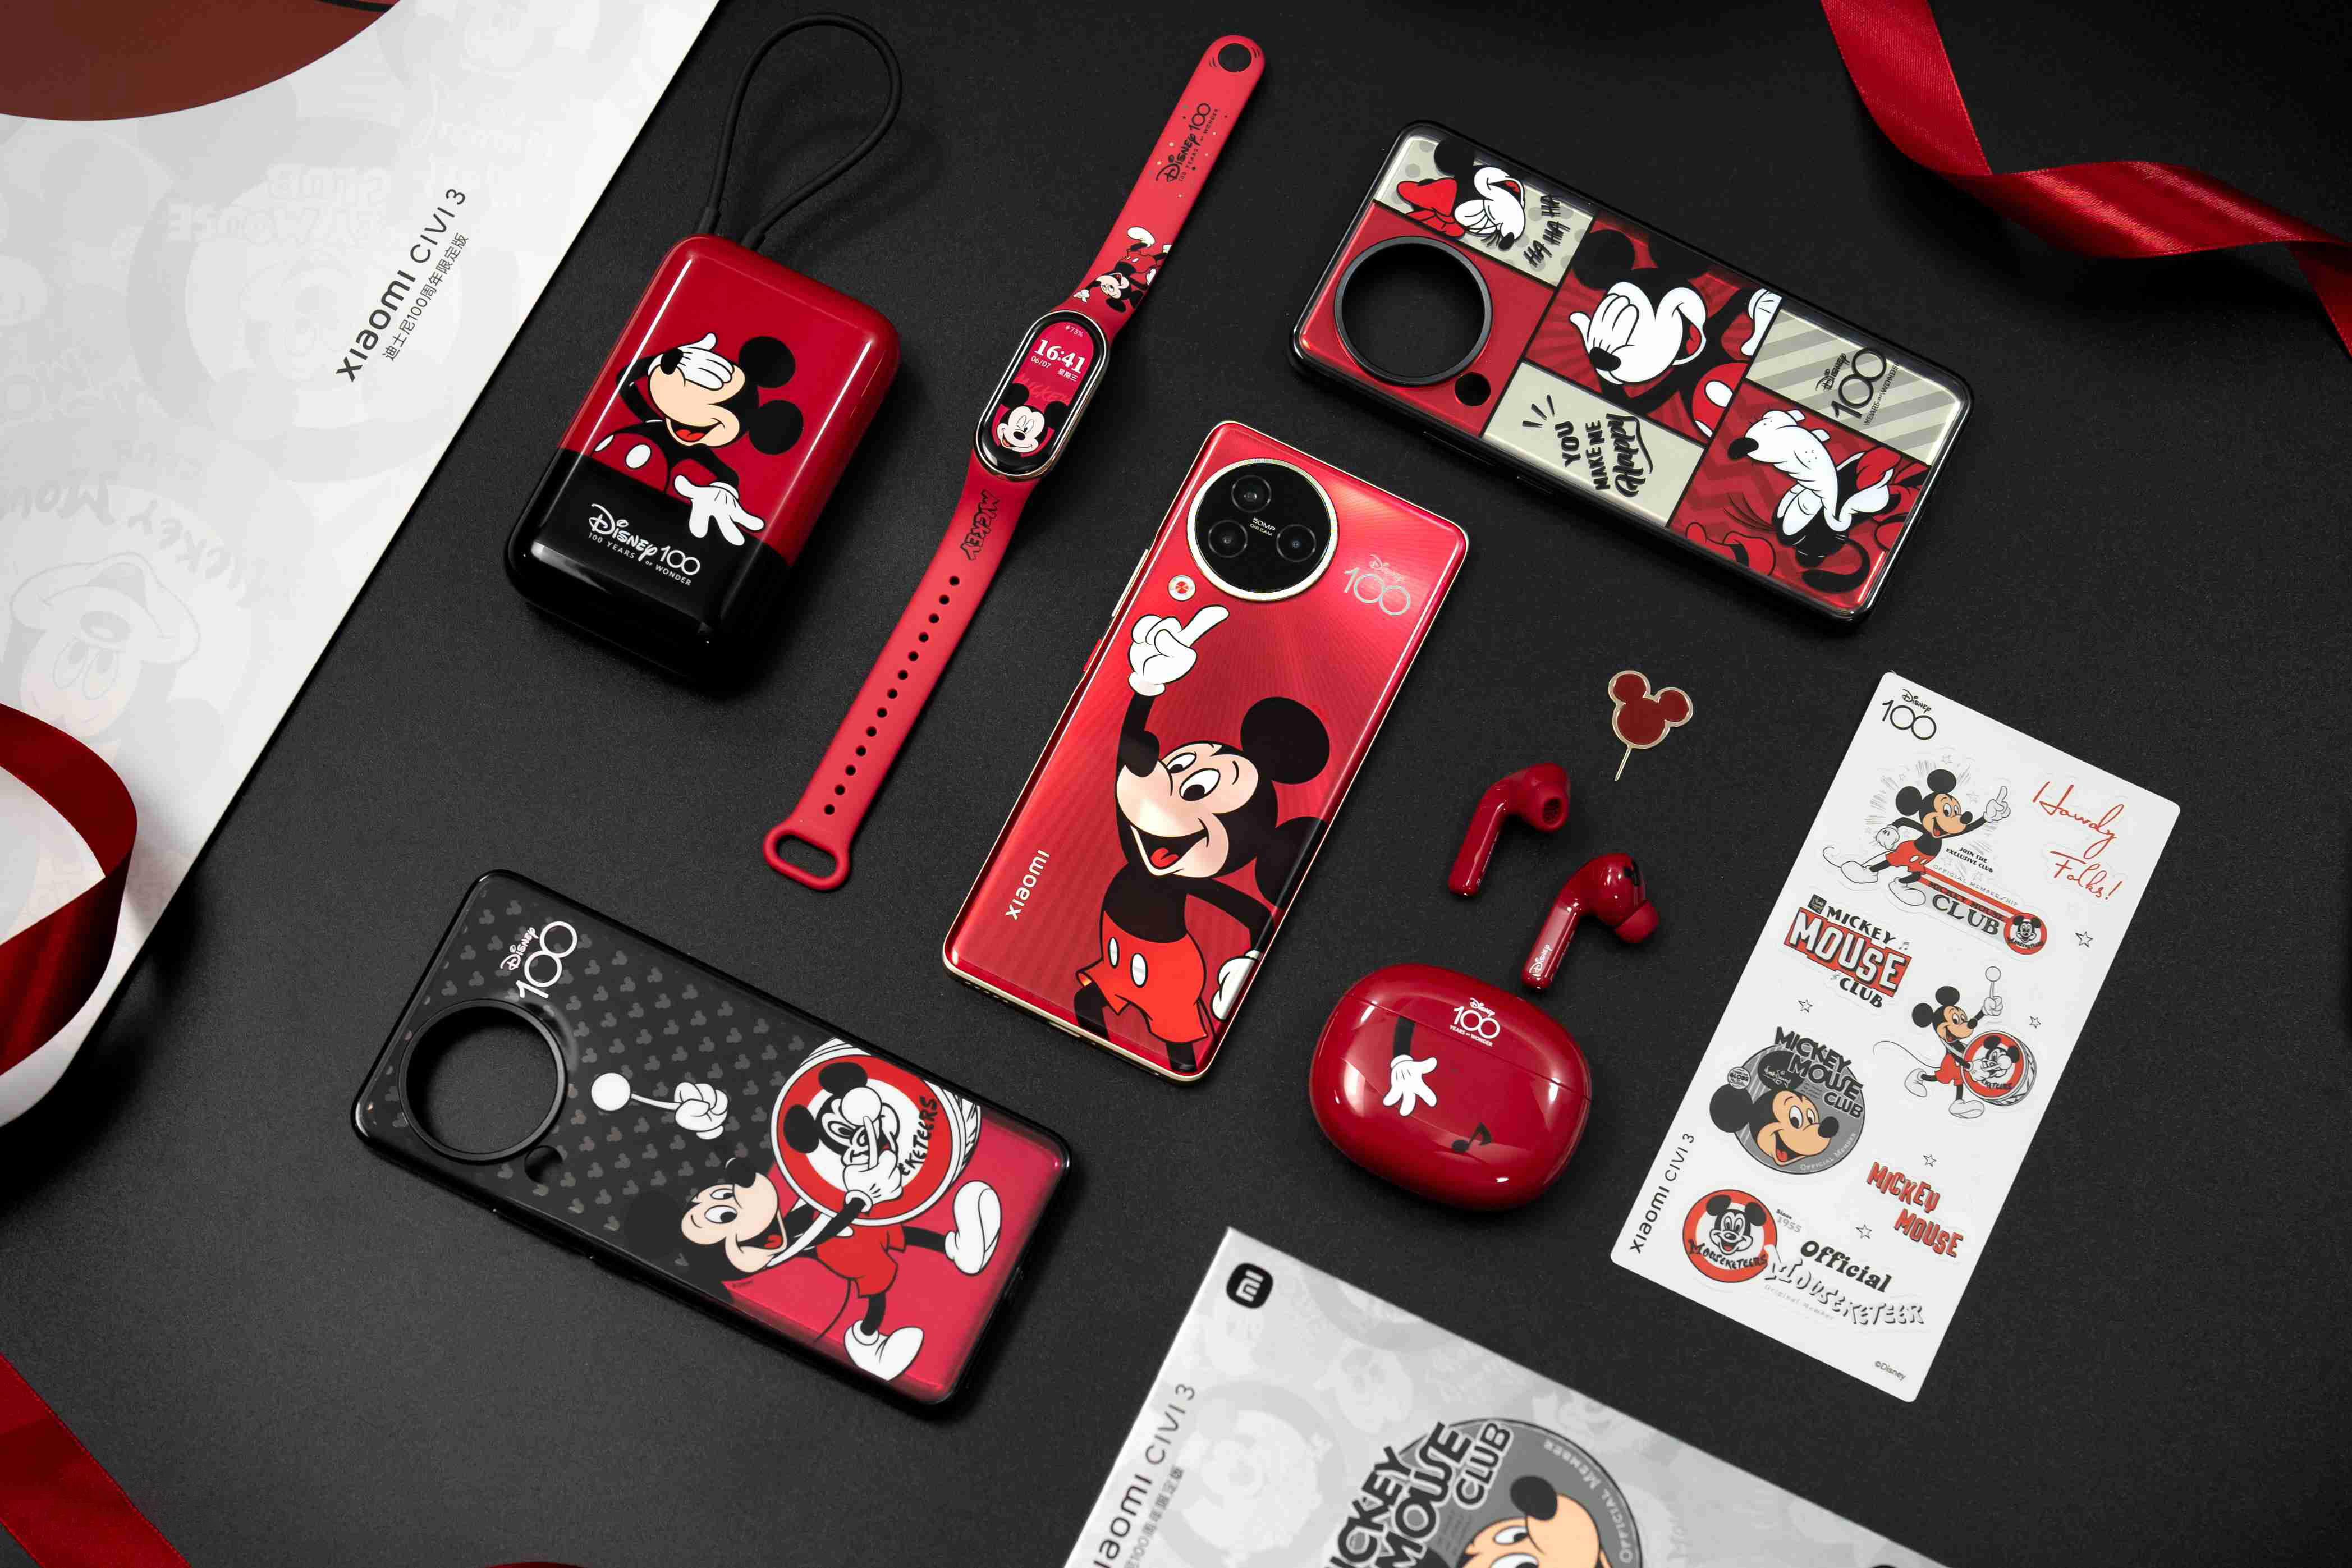 Xiaomi Civi 3 Disney Limited Edition Experience